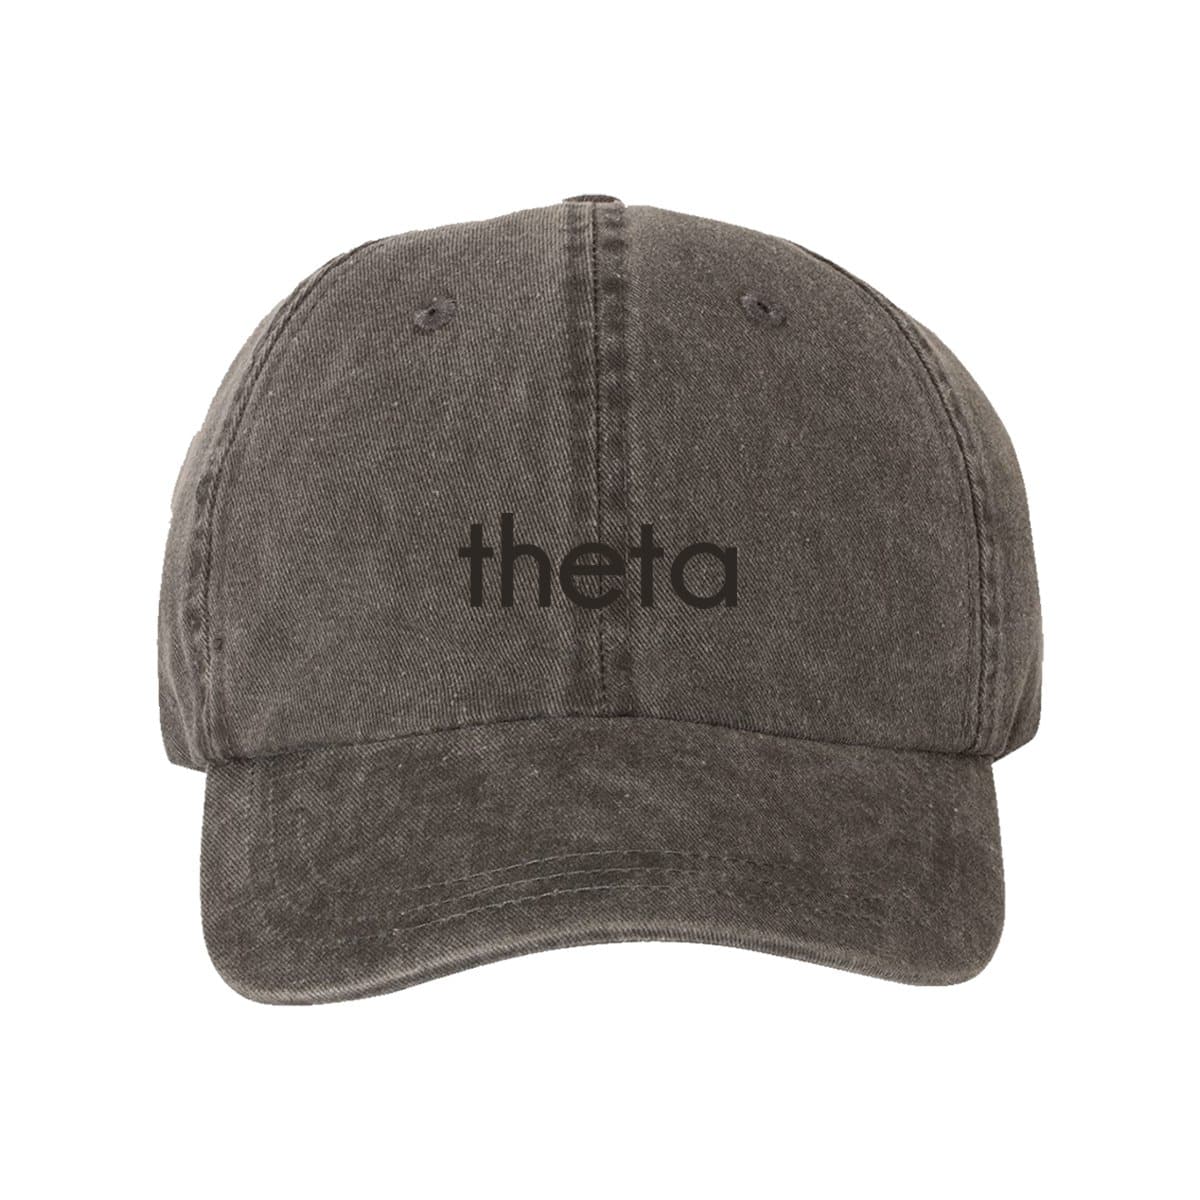 Theta Tone On Tone Hat | Kappa Alpha Theta | Headwear > Billed hats